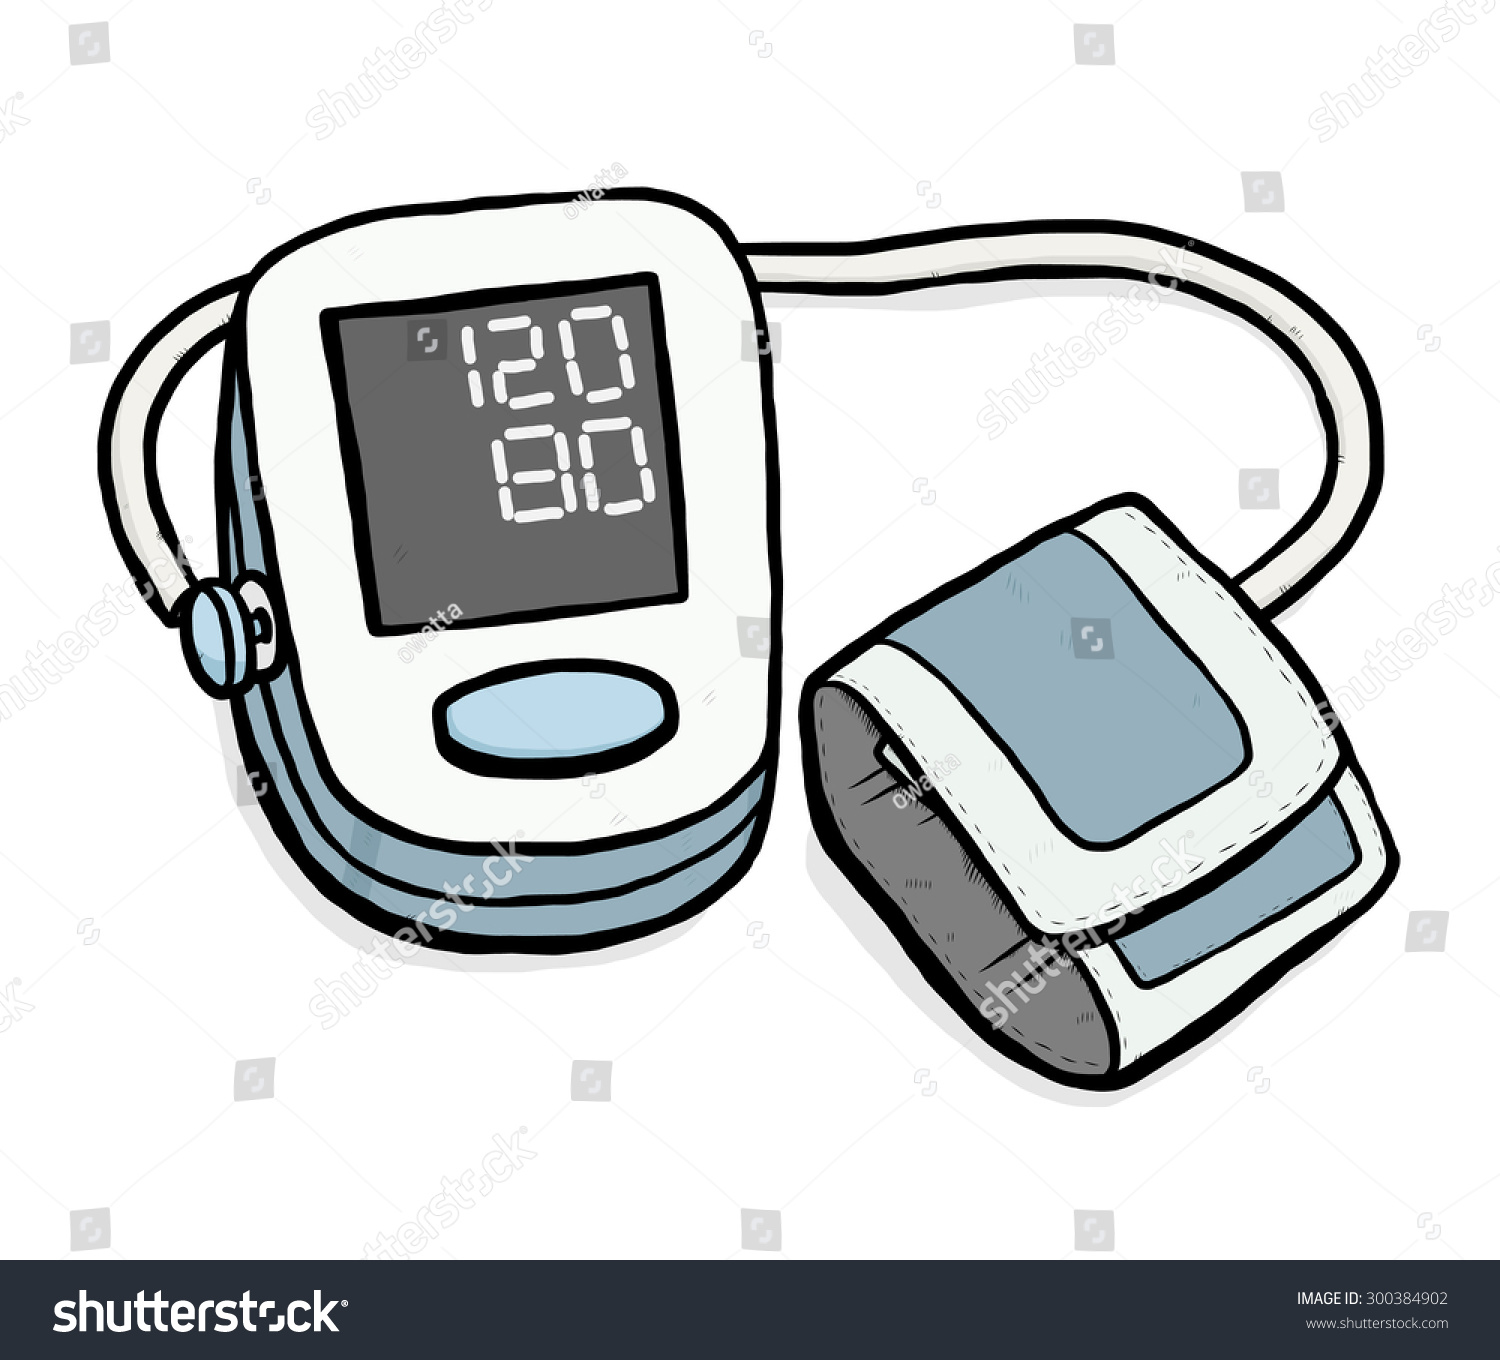 blood pressure clipart - photo #50